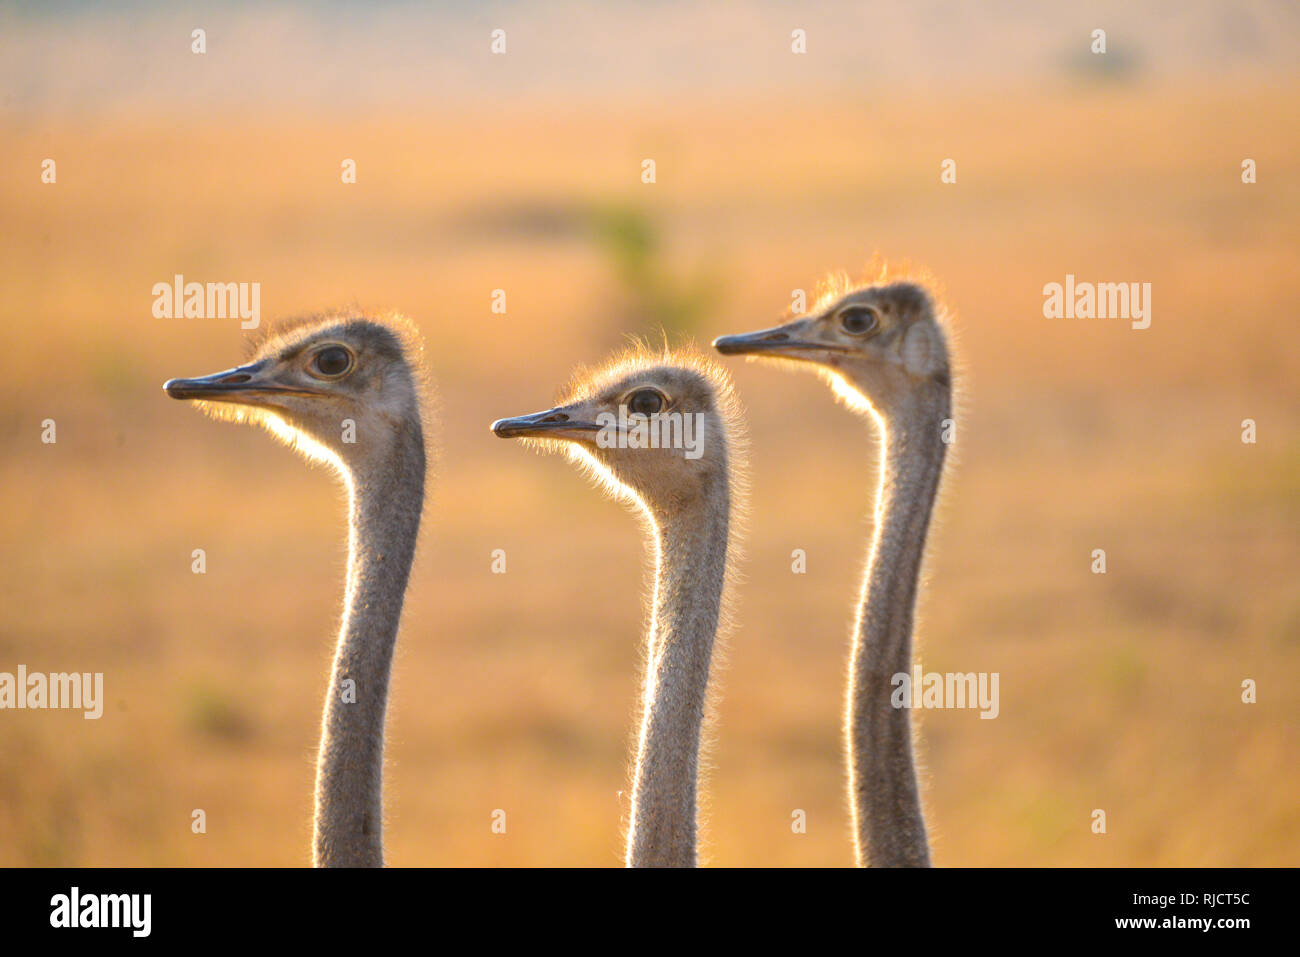 close up of three heads of female ostriches in Masai Mara, Kenya, Africa Stock Photo